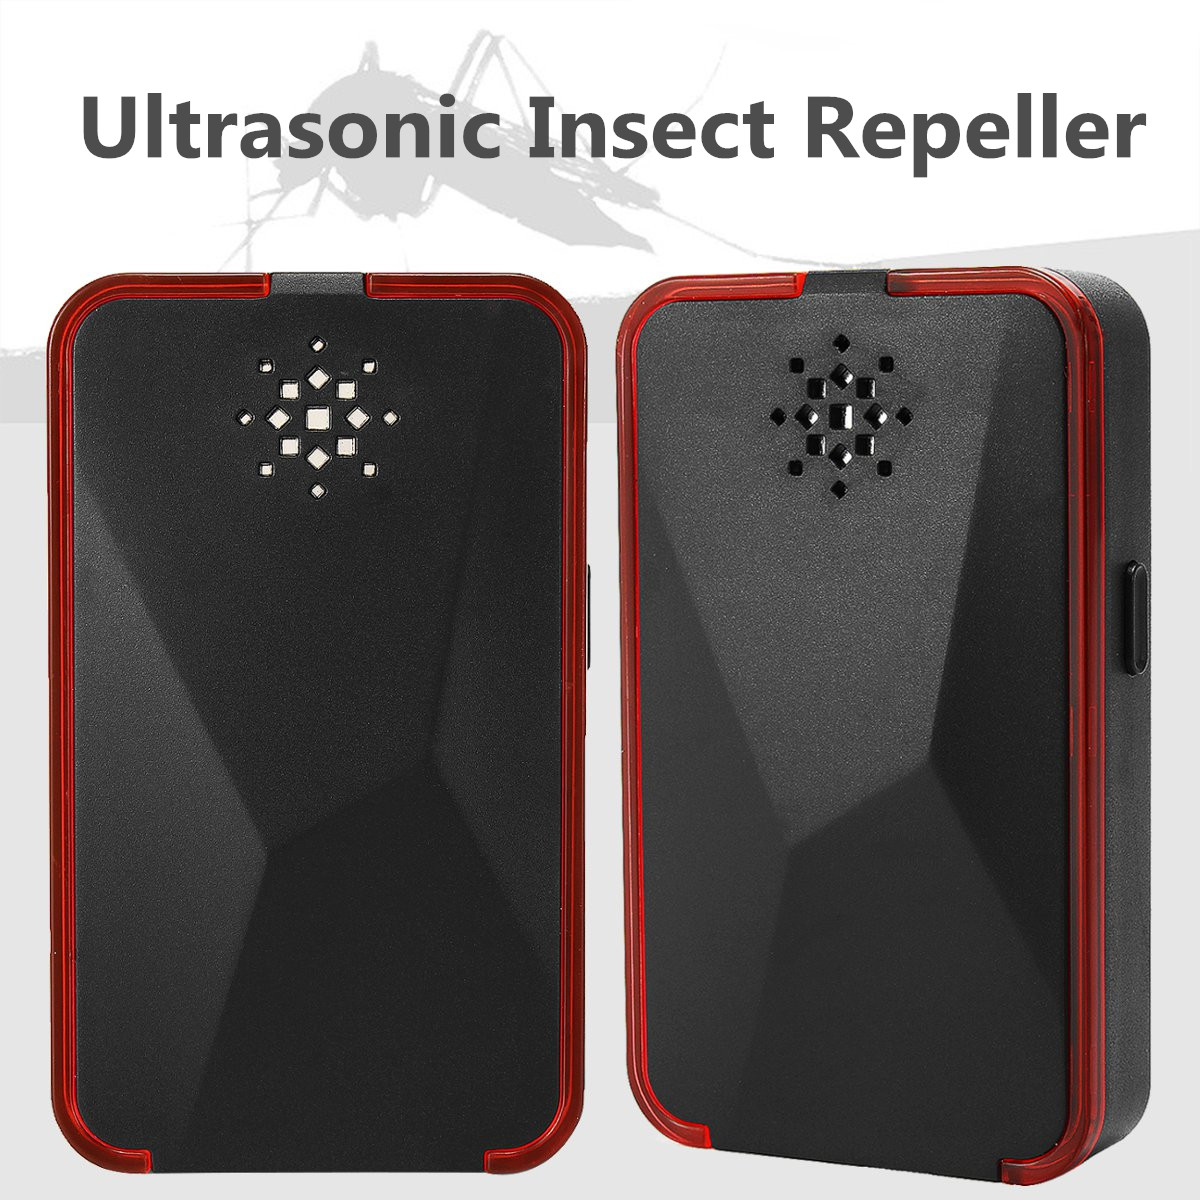 Ultrasonic-Pest-Repeller-Electronic-Ultrasonic-Pest-Repeller-Plug-in-Mosquito-Repellent-Pest-Control-1352321-3